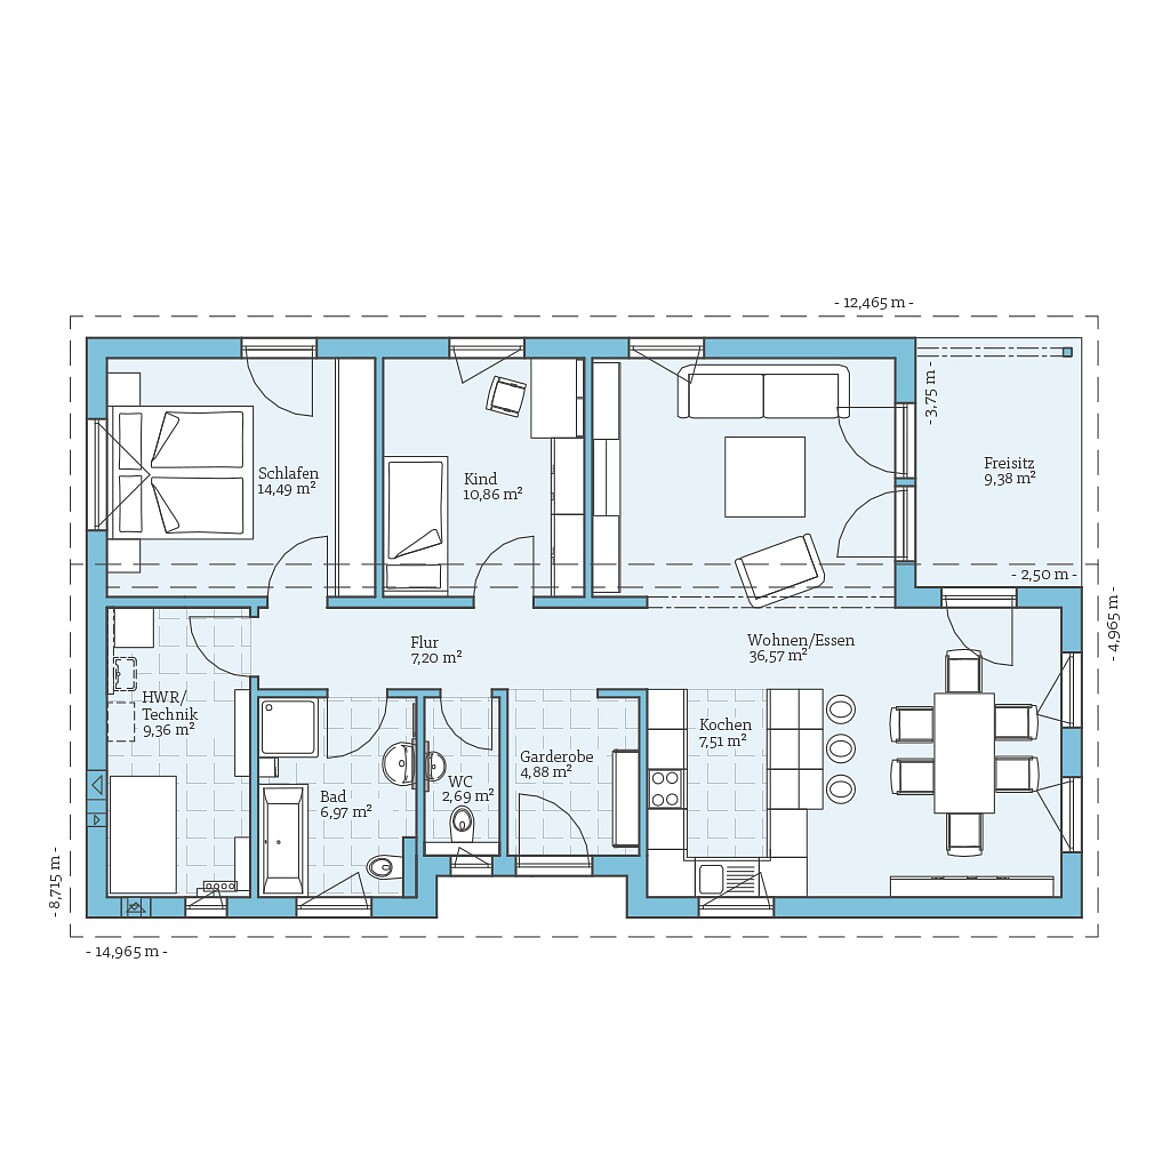 Prefabricated house Bungalow 109: Ground floor plan